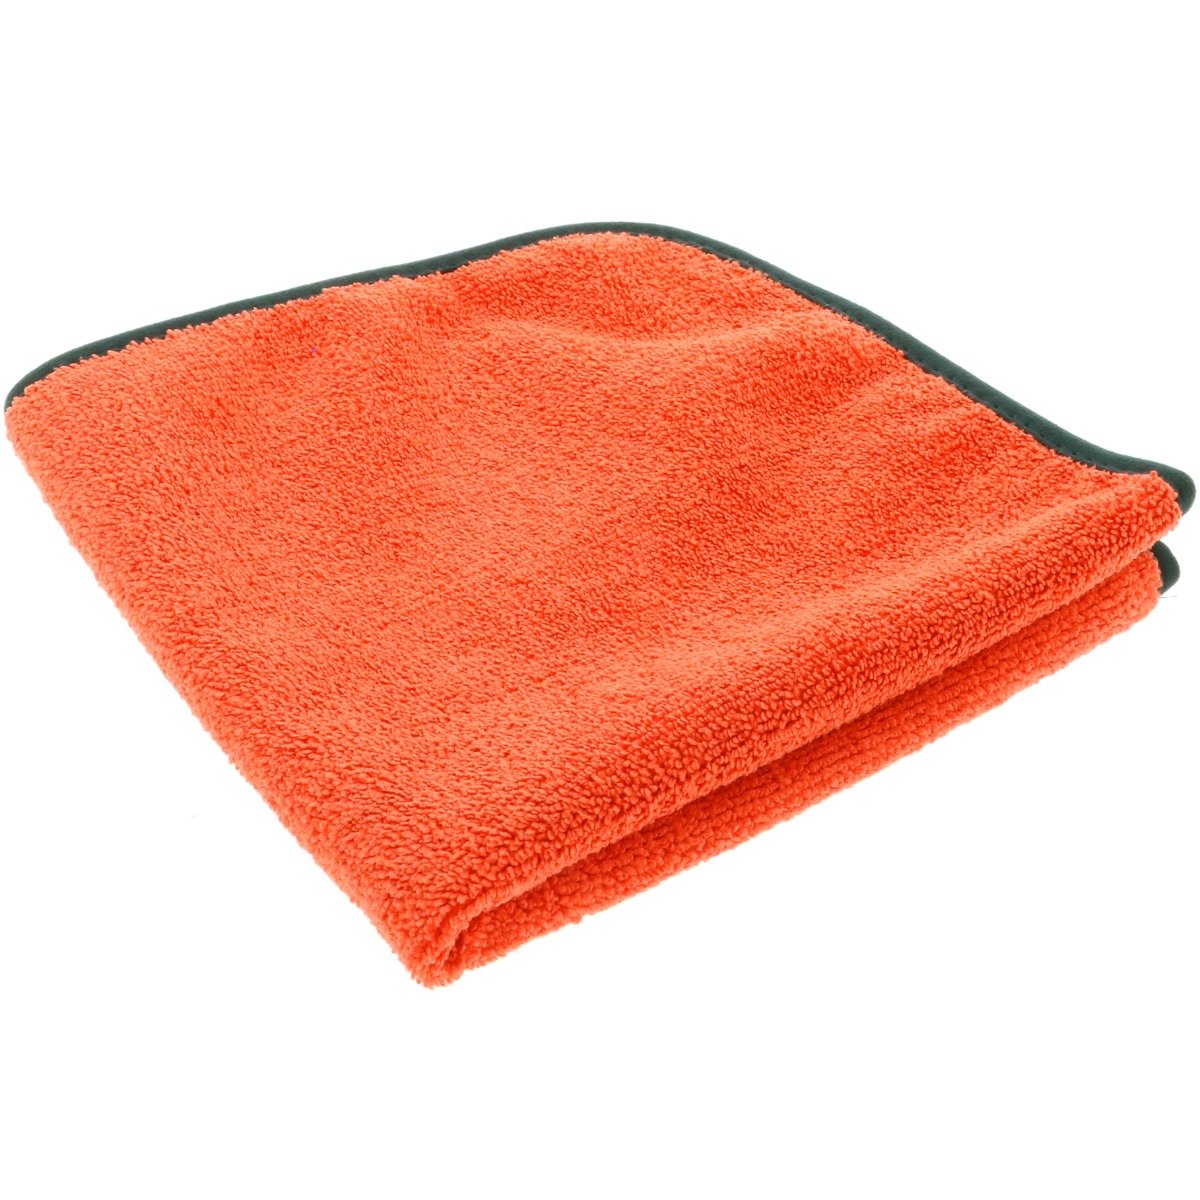 The Drago Microfiber Towel - 41x41cm